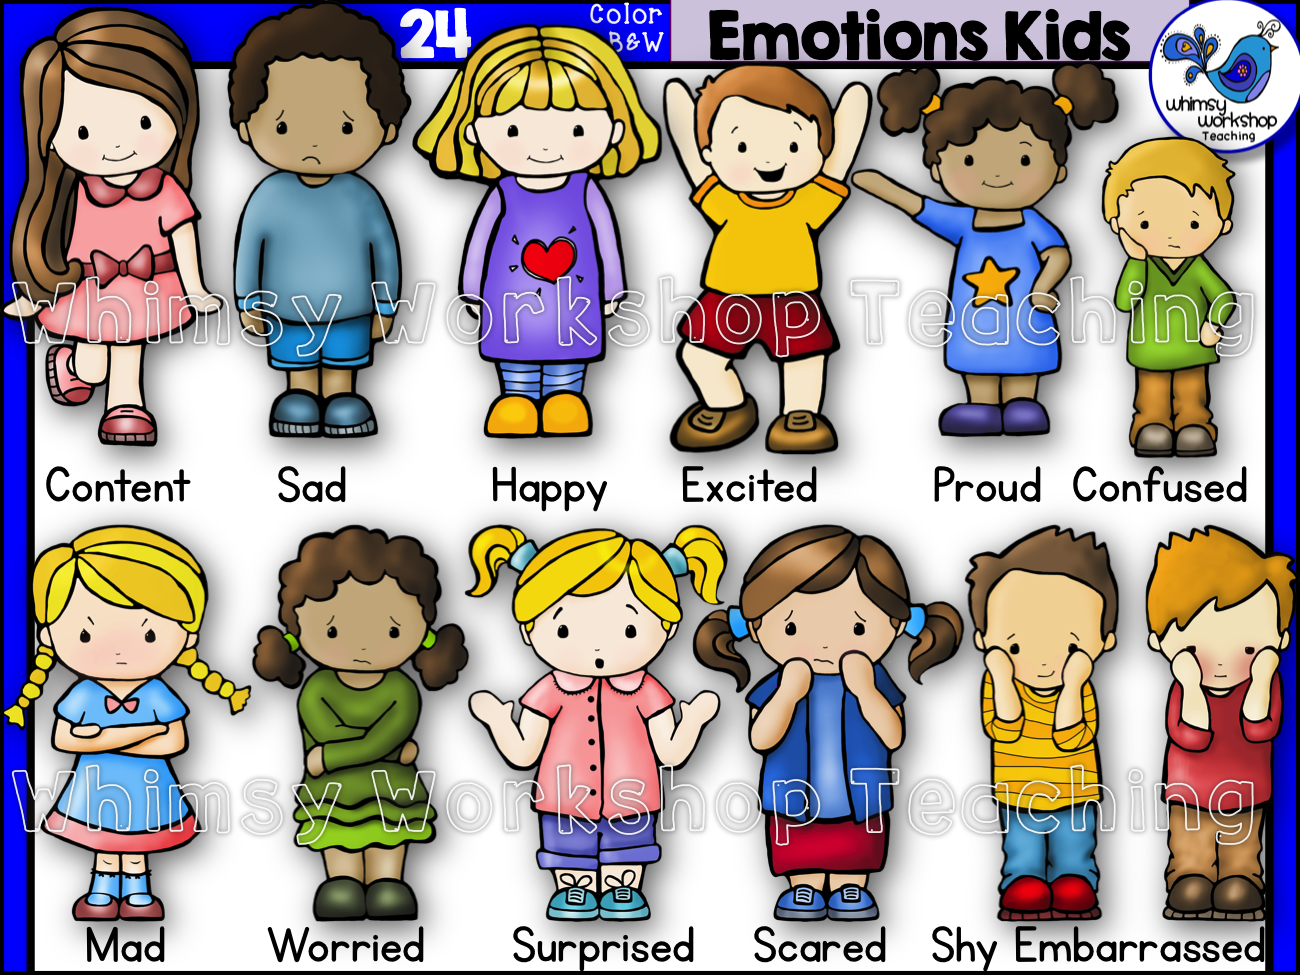 Emotions kids clip.